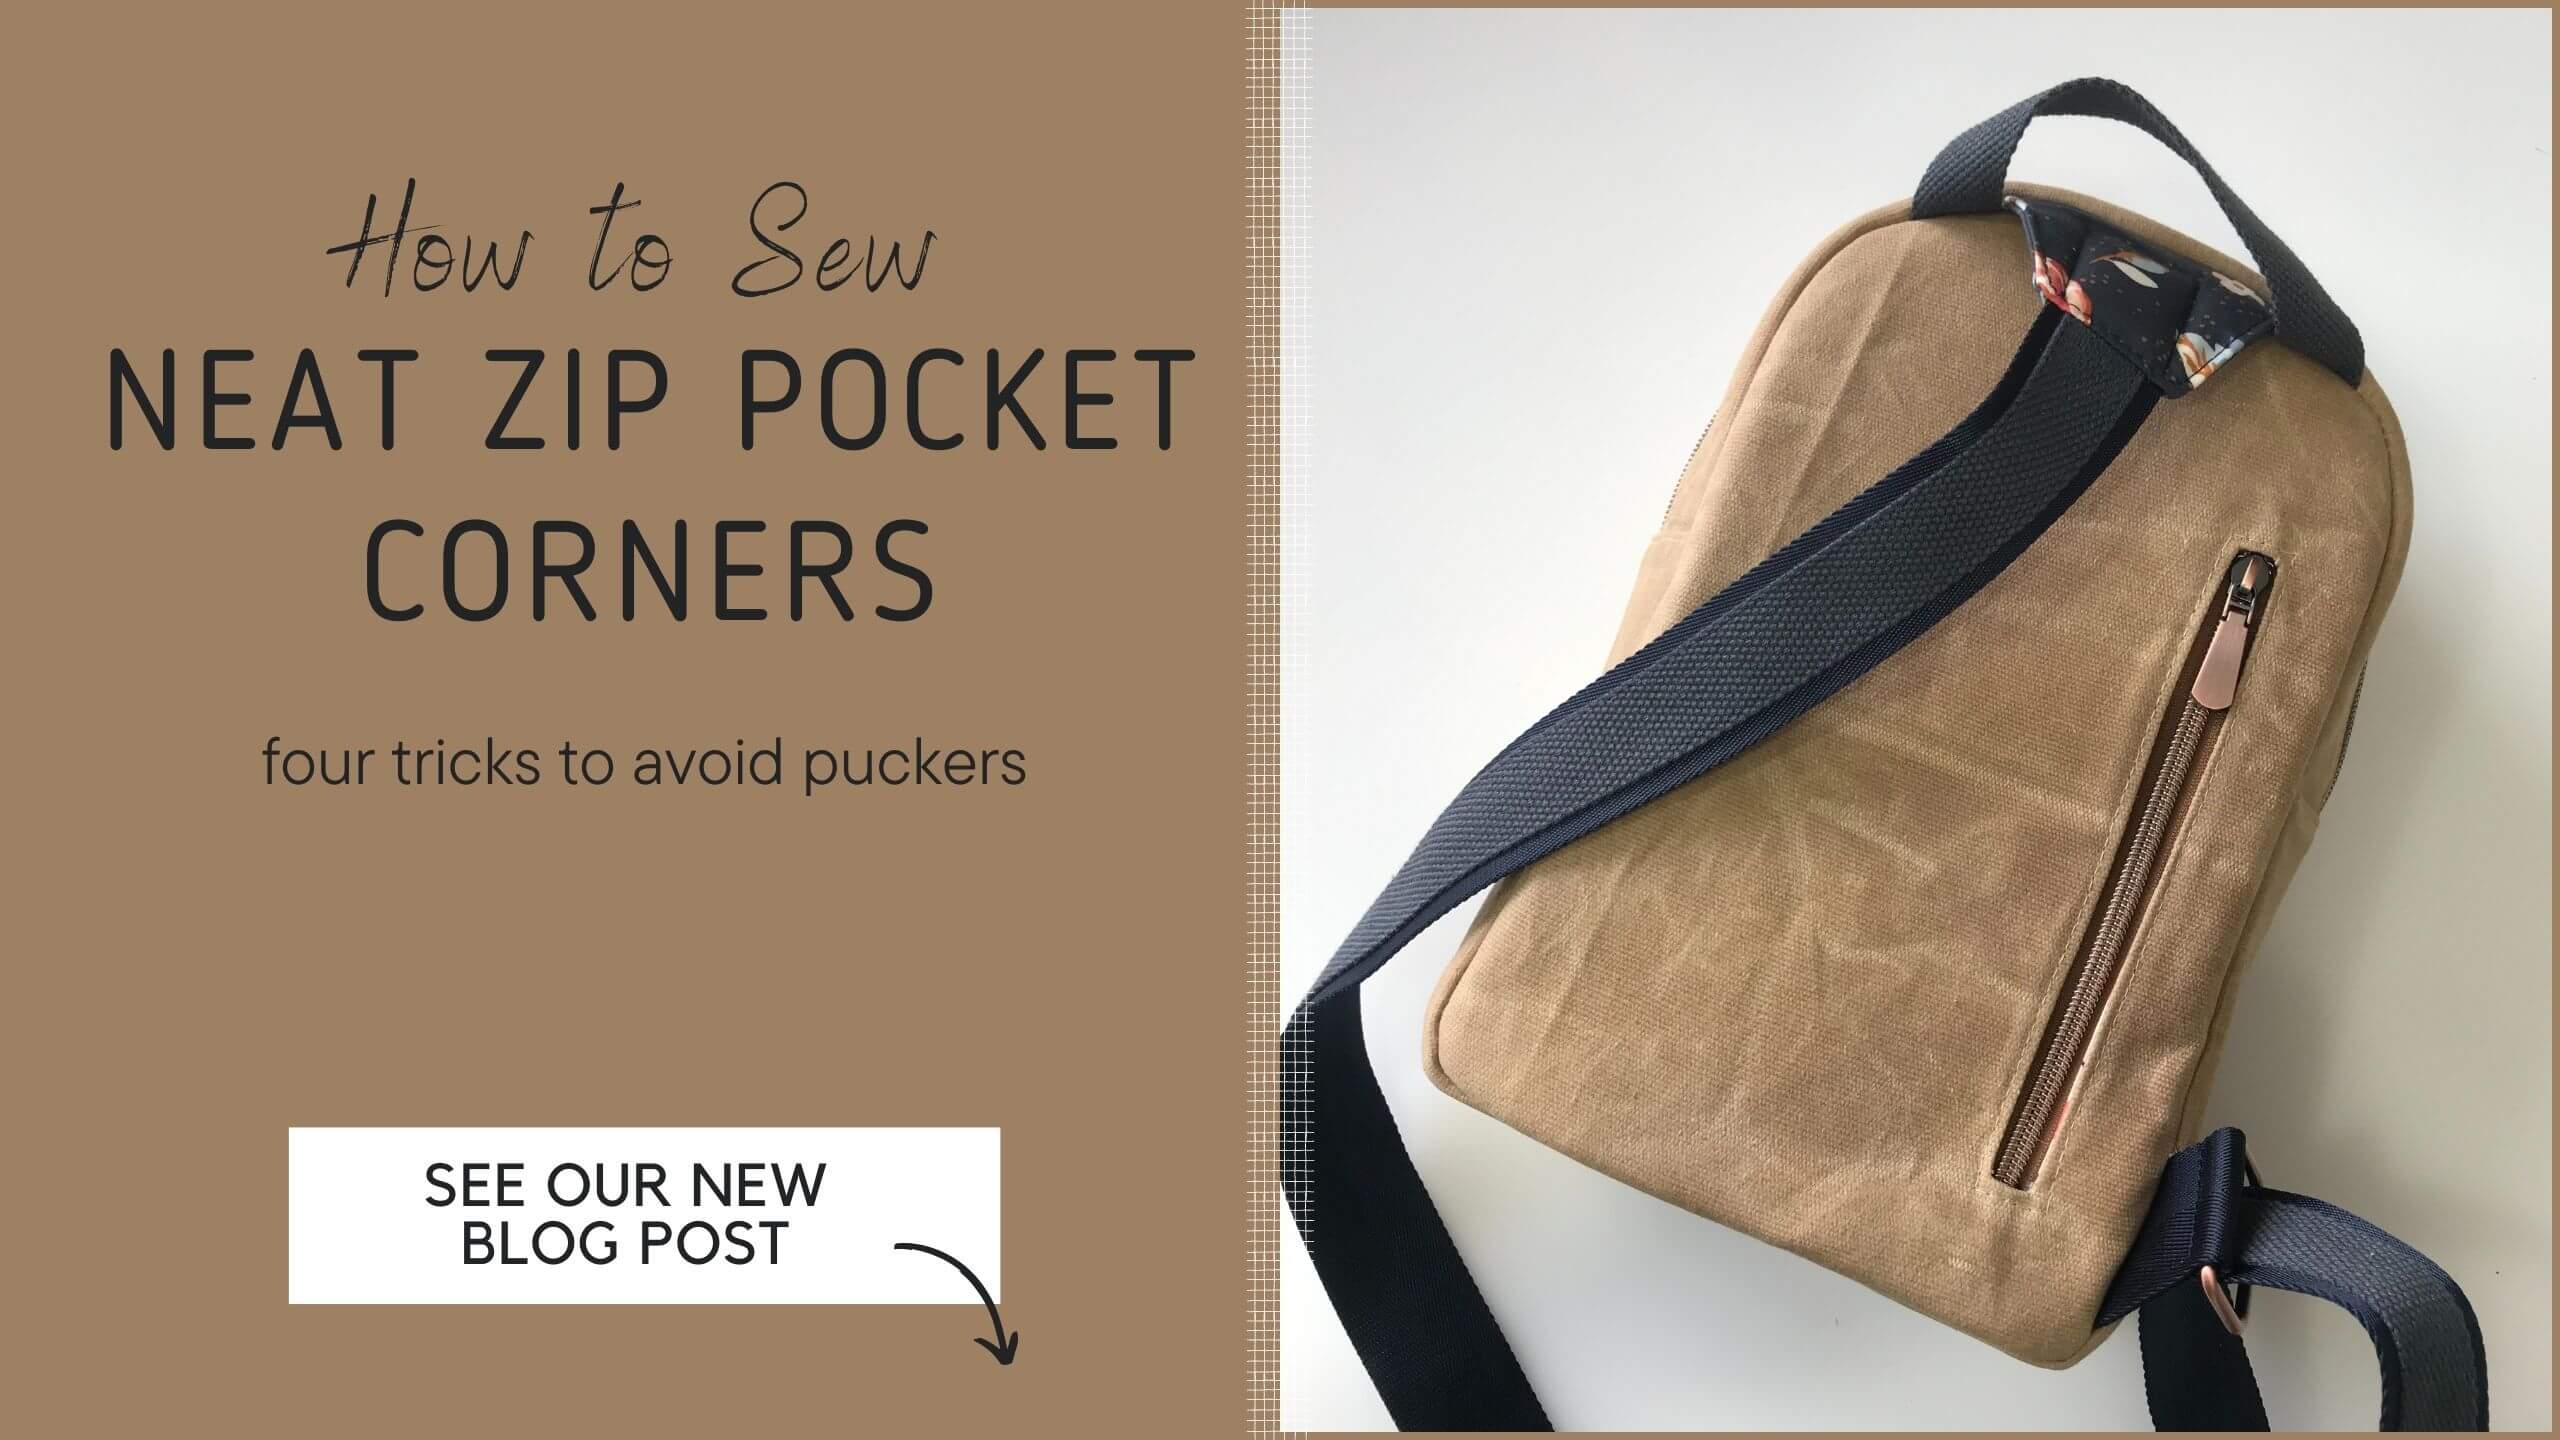 How to sew neat zip pocket corners